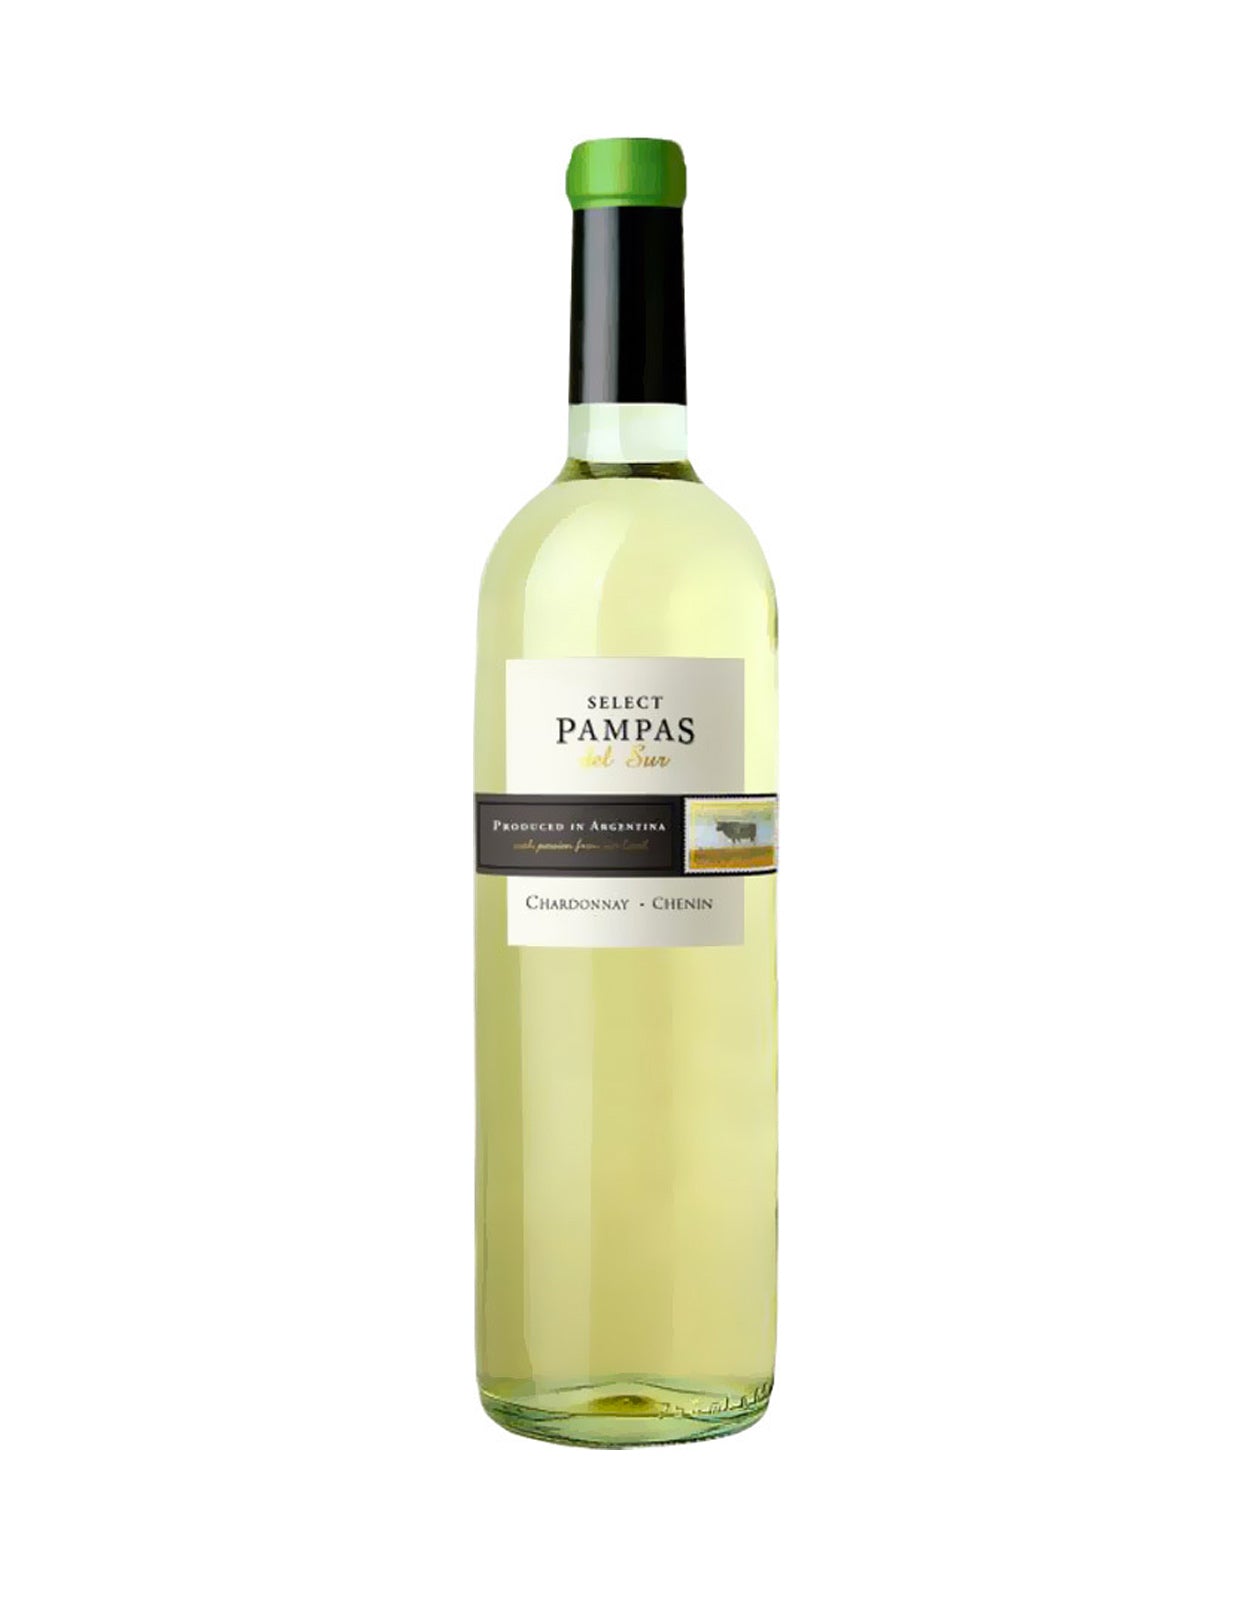 Pampas Chardonnay - Chenin